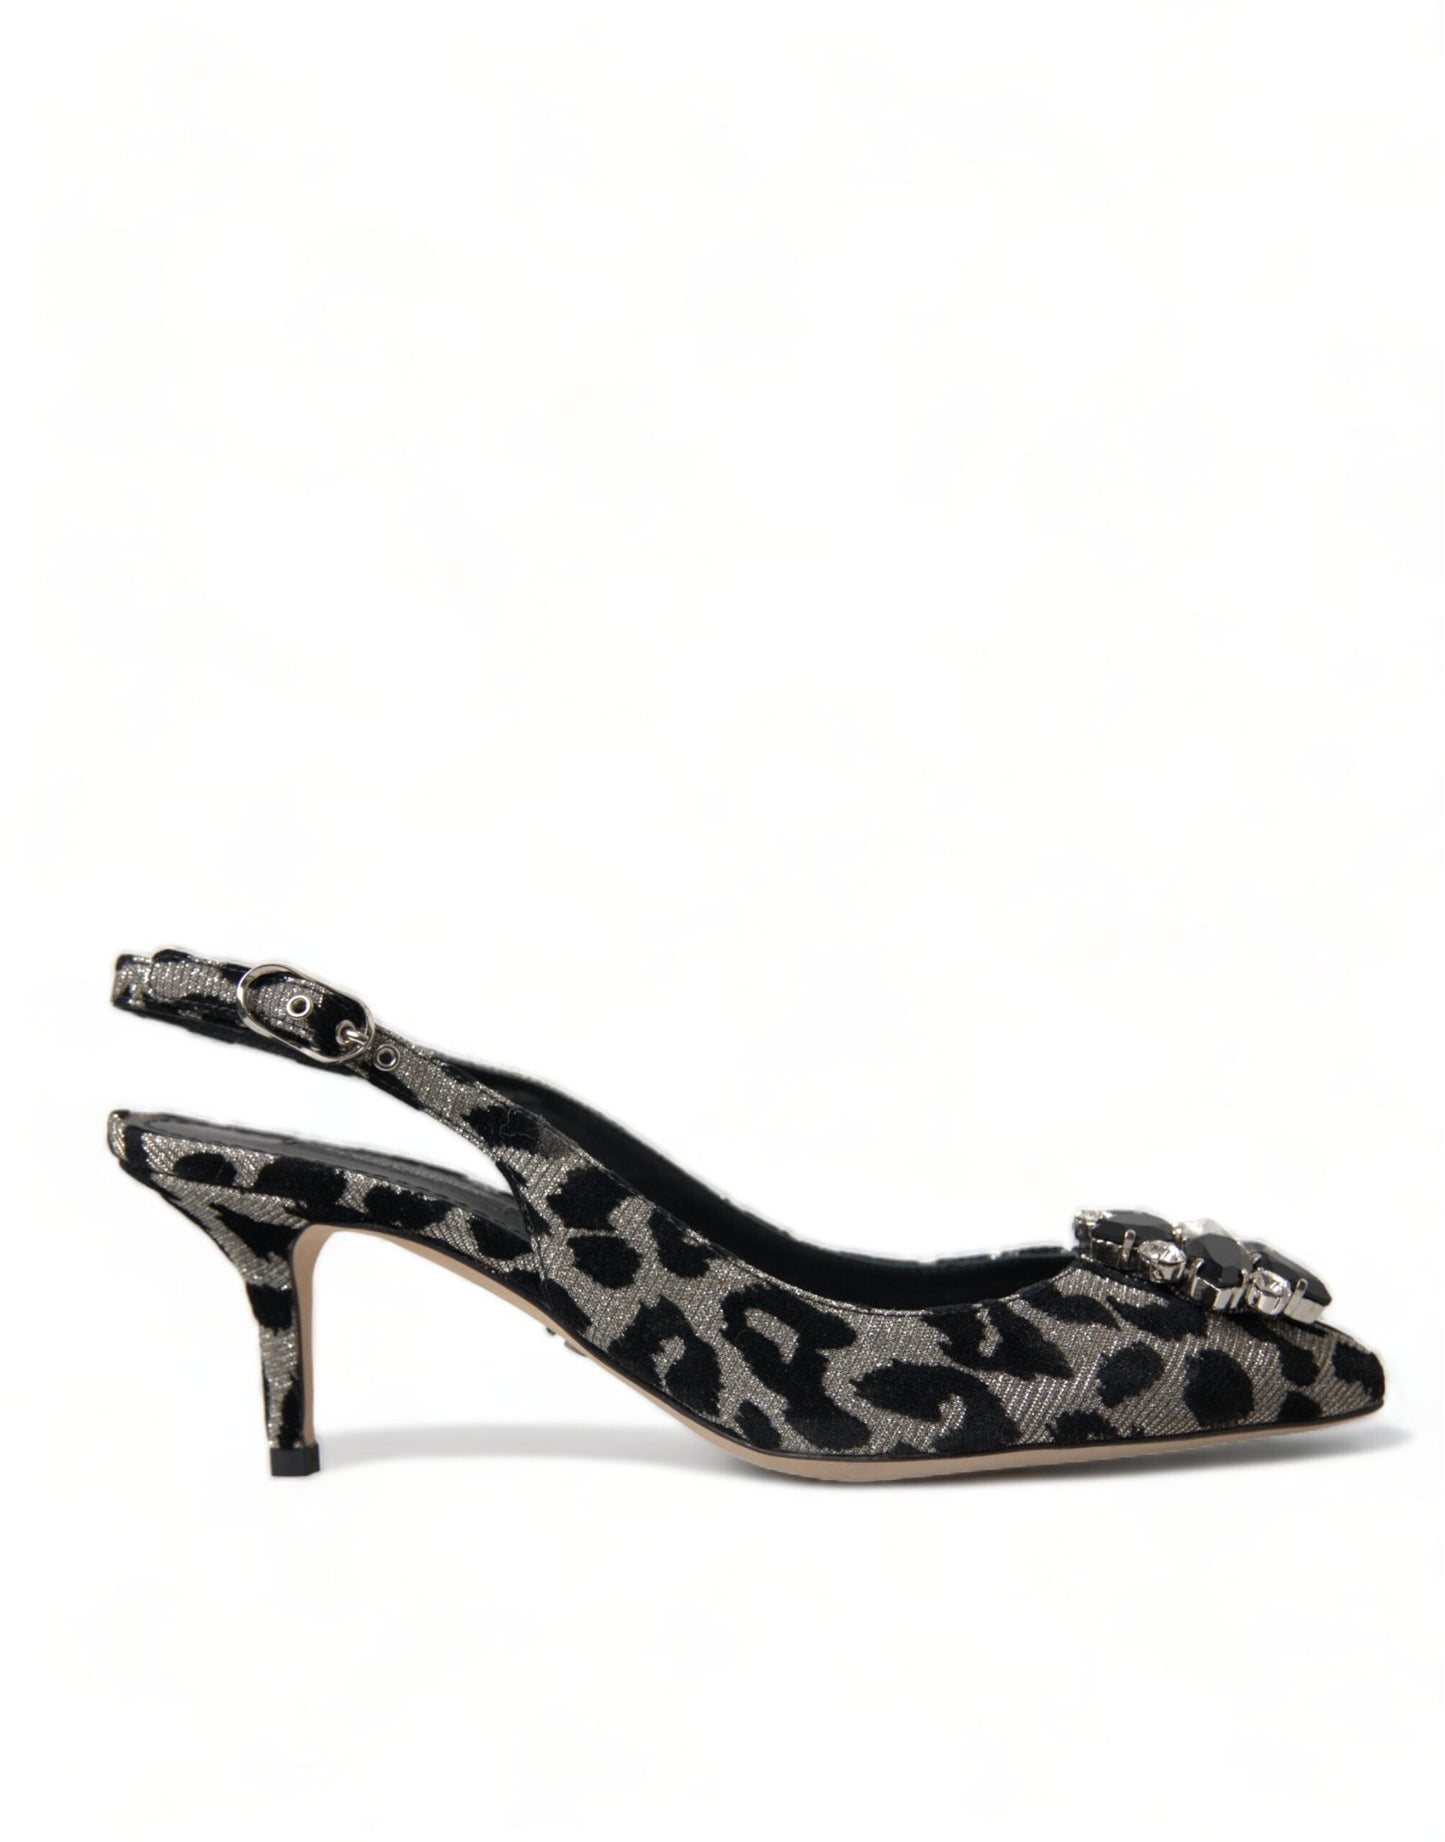 Dolce & Gabbana Silver Leopard Crystal Slingback Pumps Shoes | Fashionsarah.com